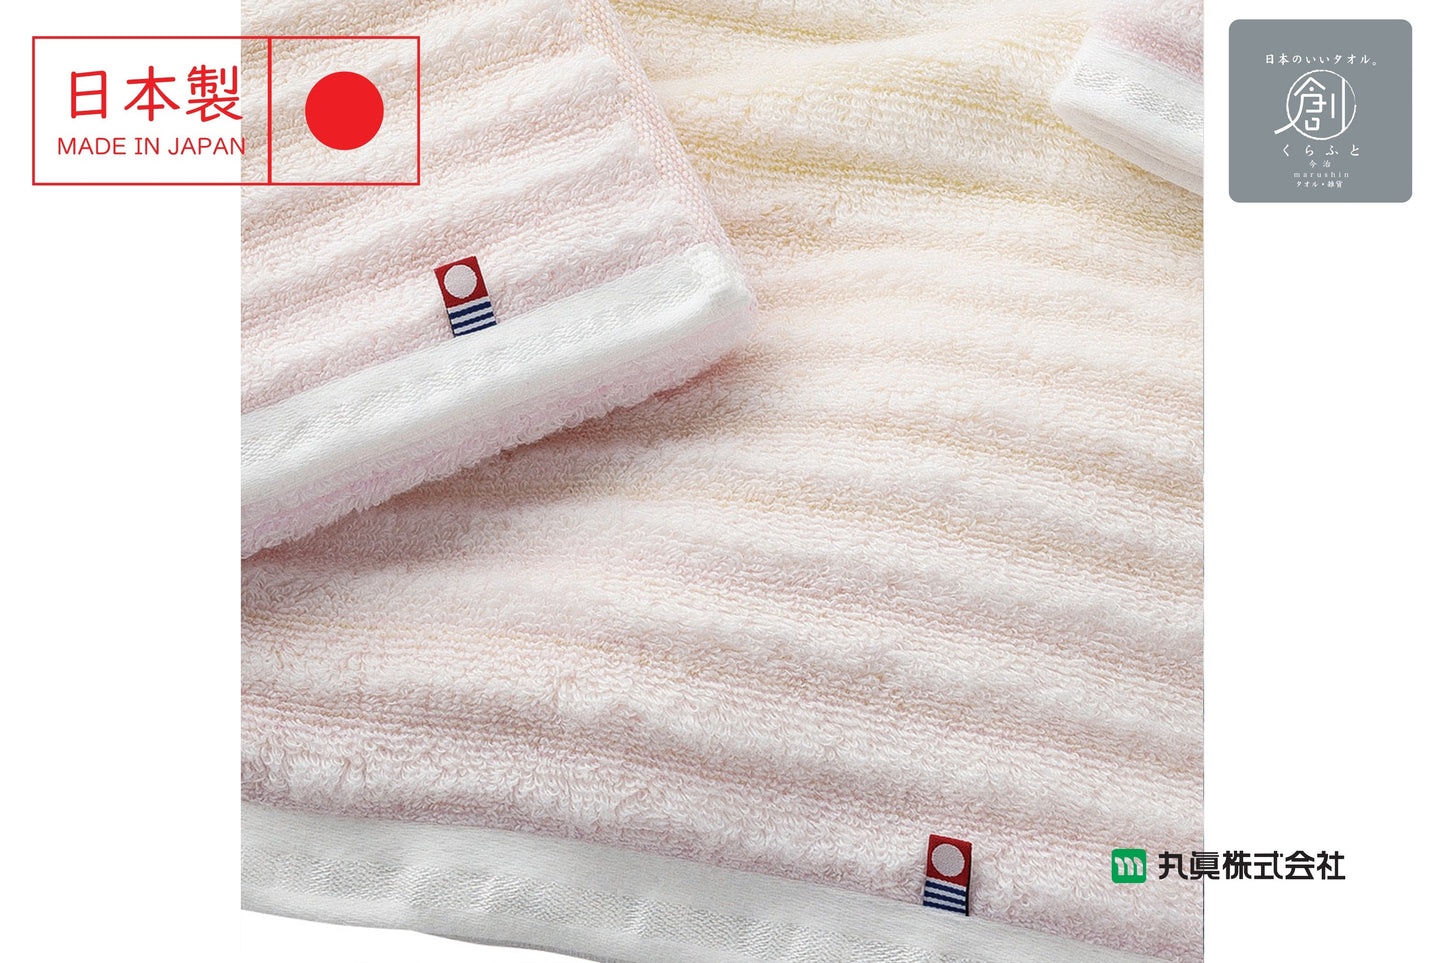 Imabari "Craft" Star plus Shine Zero Twist Towel